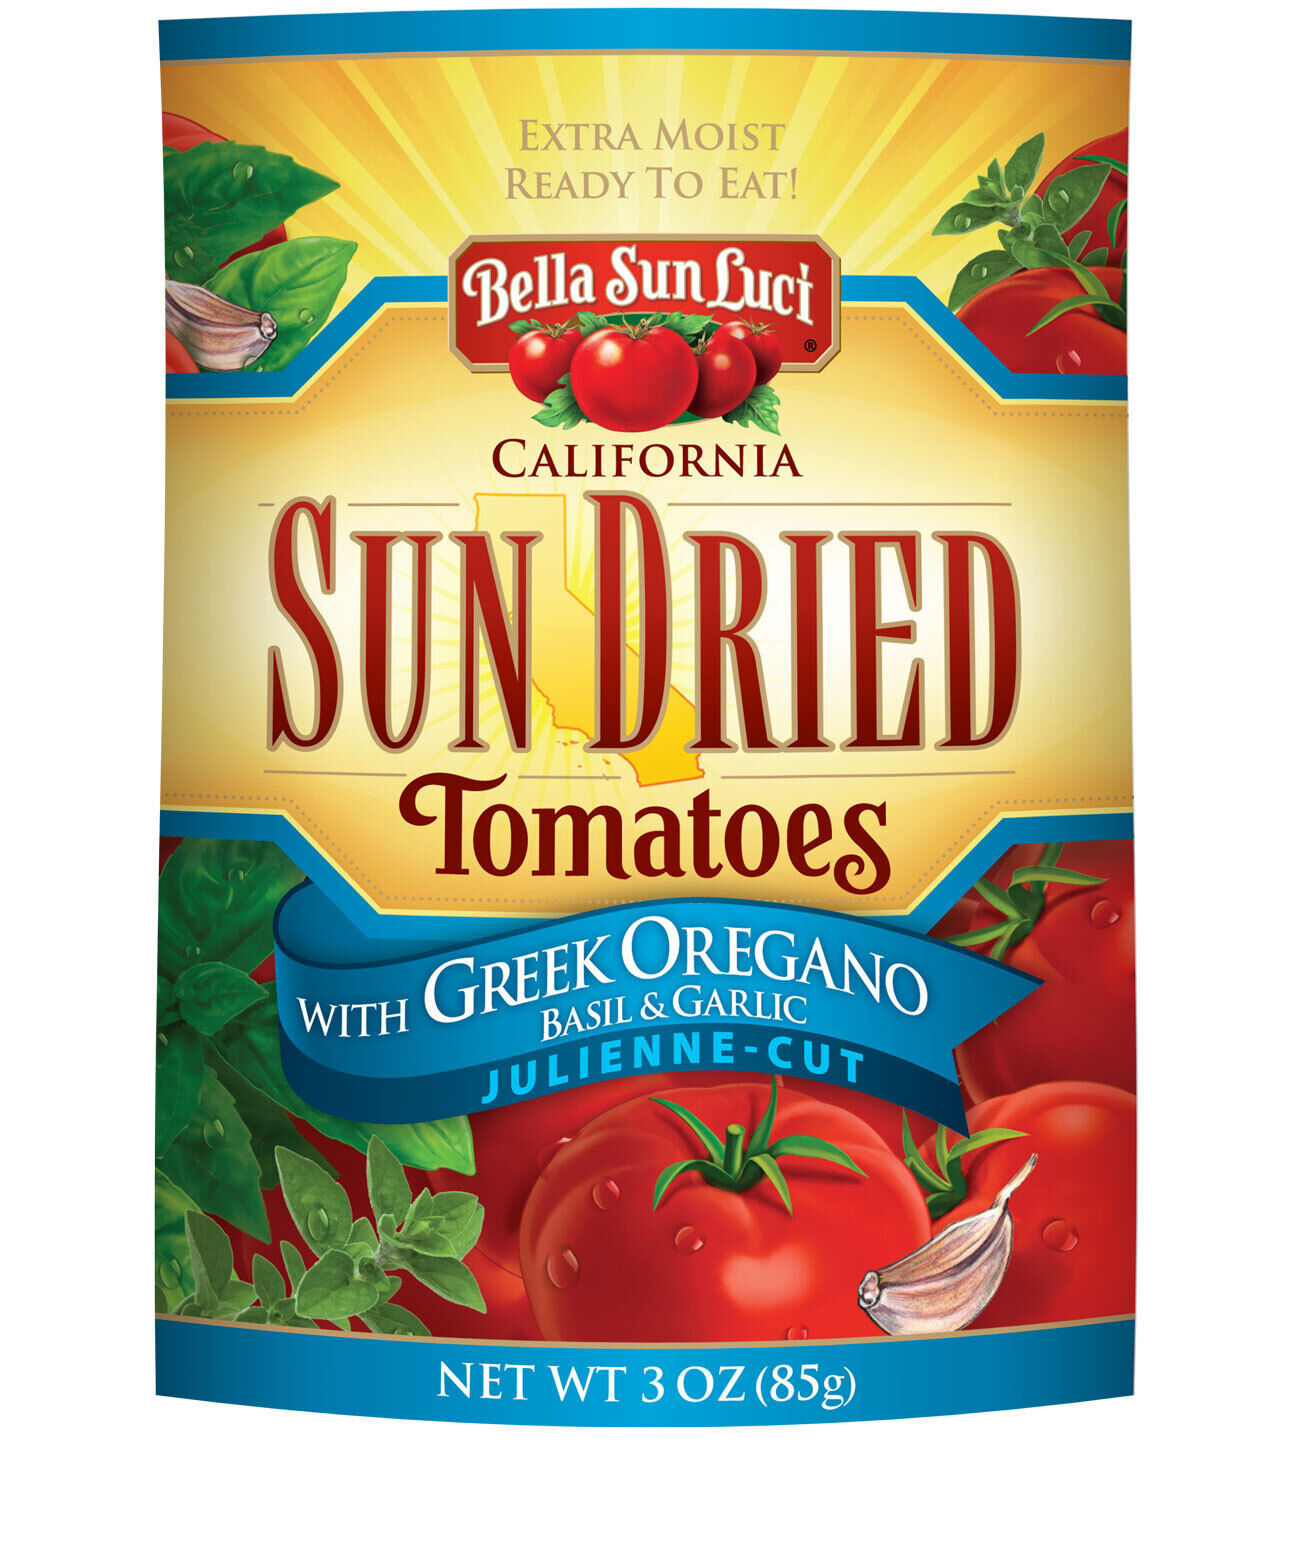 Primary image for Bella Sun Luci California Sun Dried Julienne Cut Tomatoes with Greek Oregano